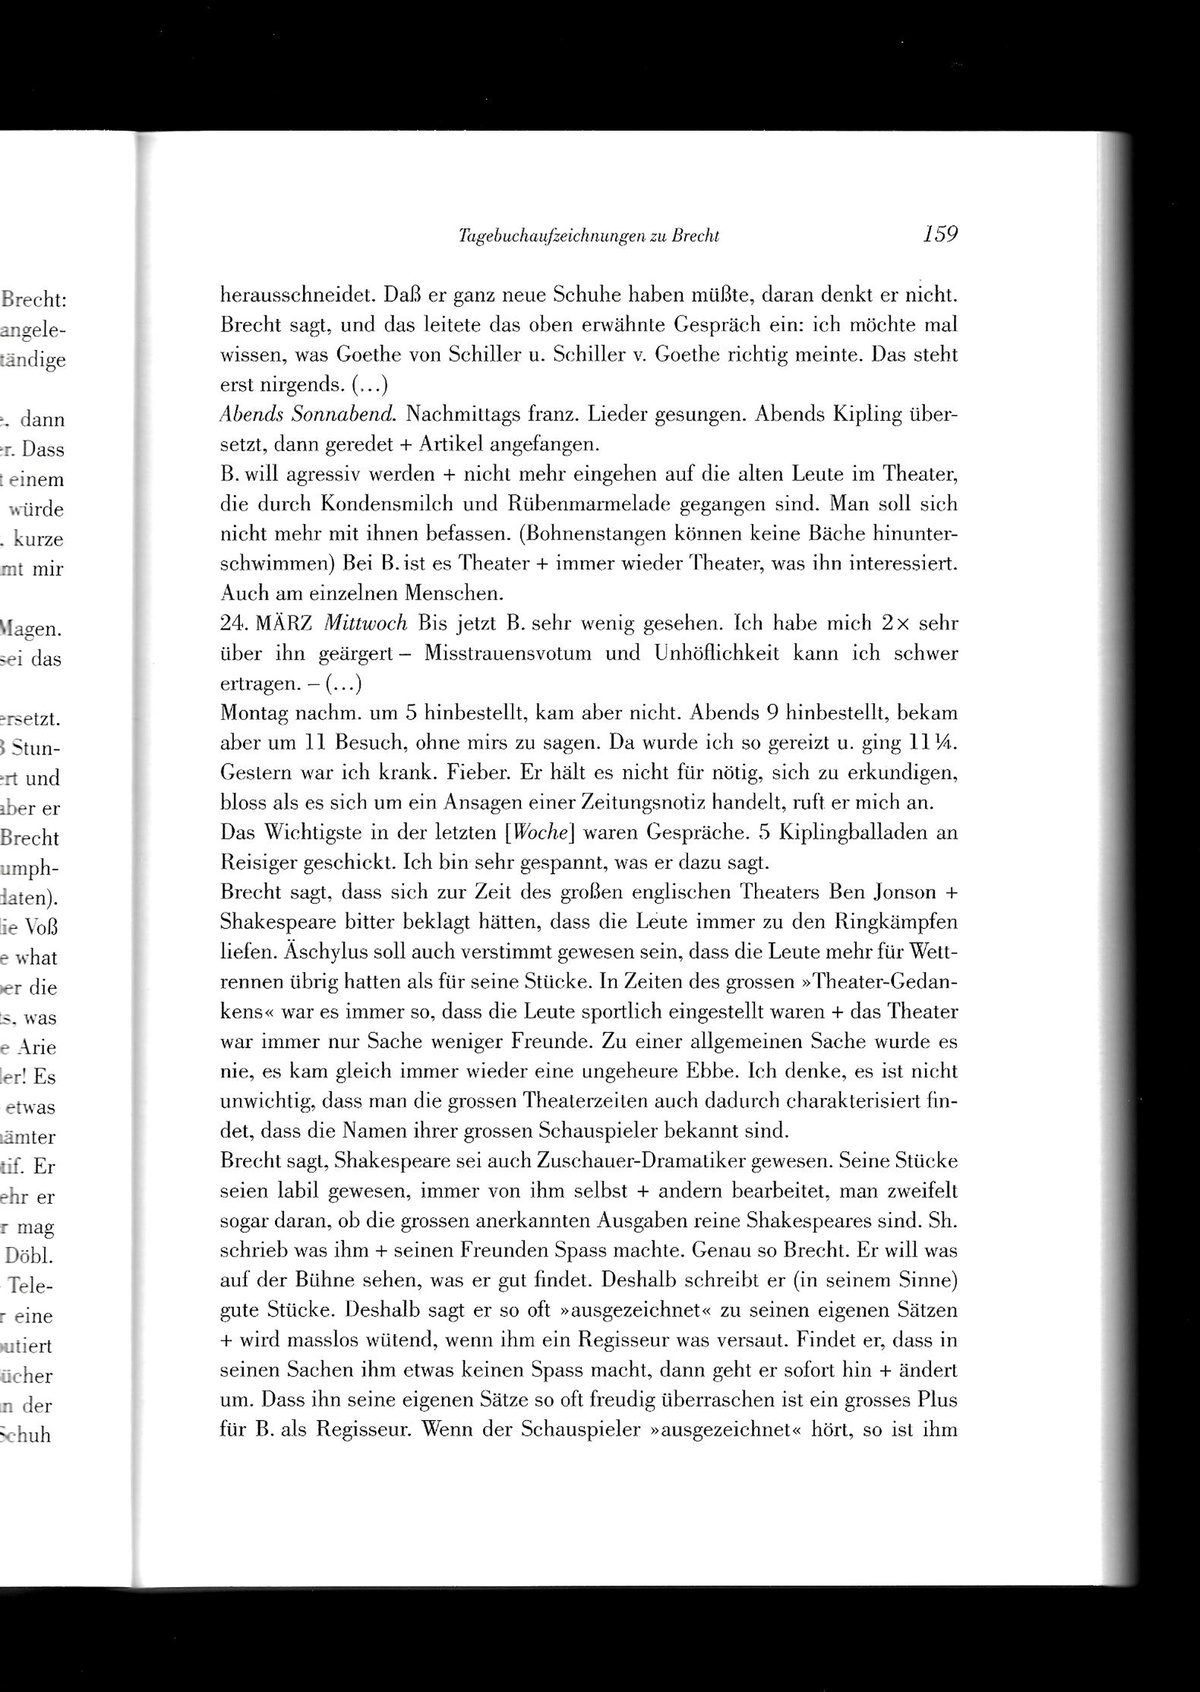 Elisabeth Hauptmann 2 × sehr über ihn geärgert. Diary notes on Brecht.With a prefatory note by Martin Kölbel and Peter Villwock.In Sinn und Form, Heft 2/2021, p. 155-163, here p. 159